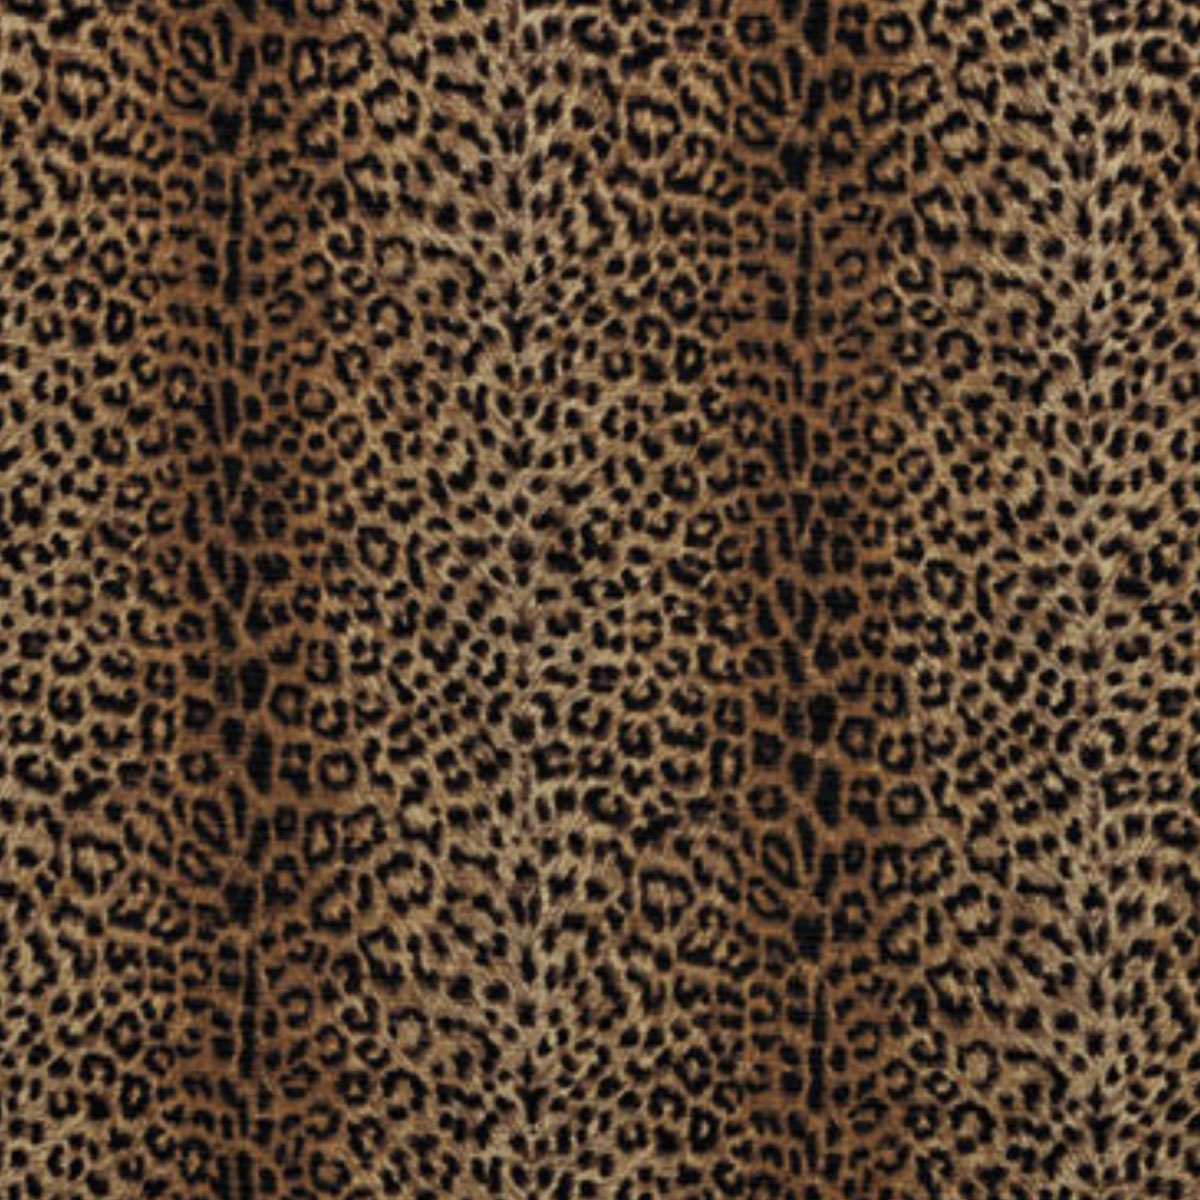 Fabric 21 - Leopard pattern